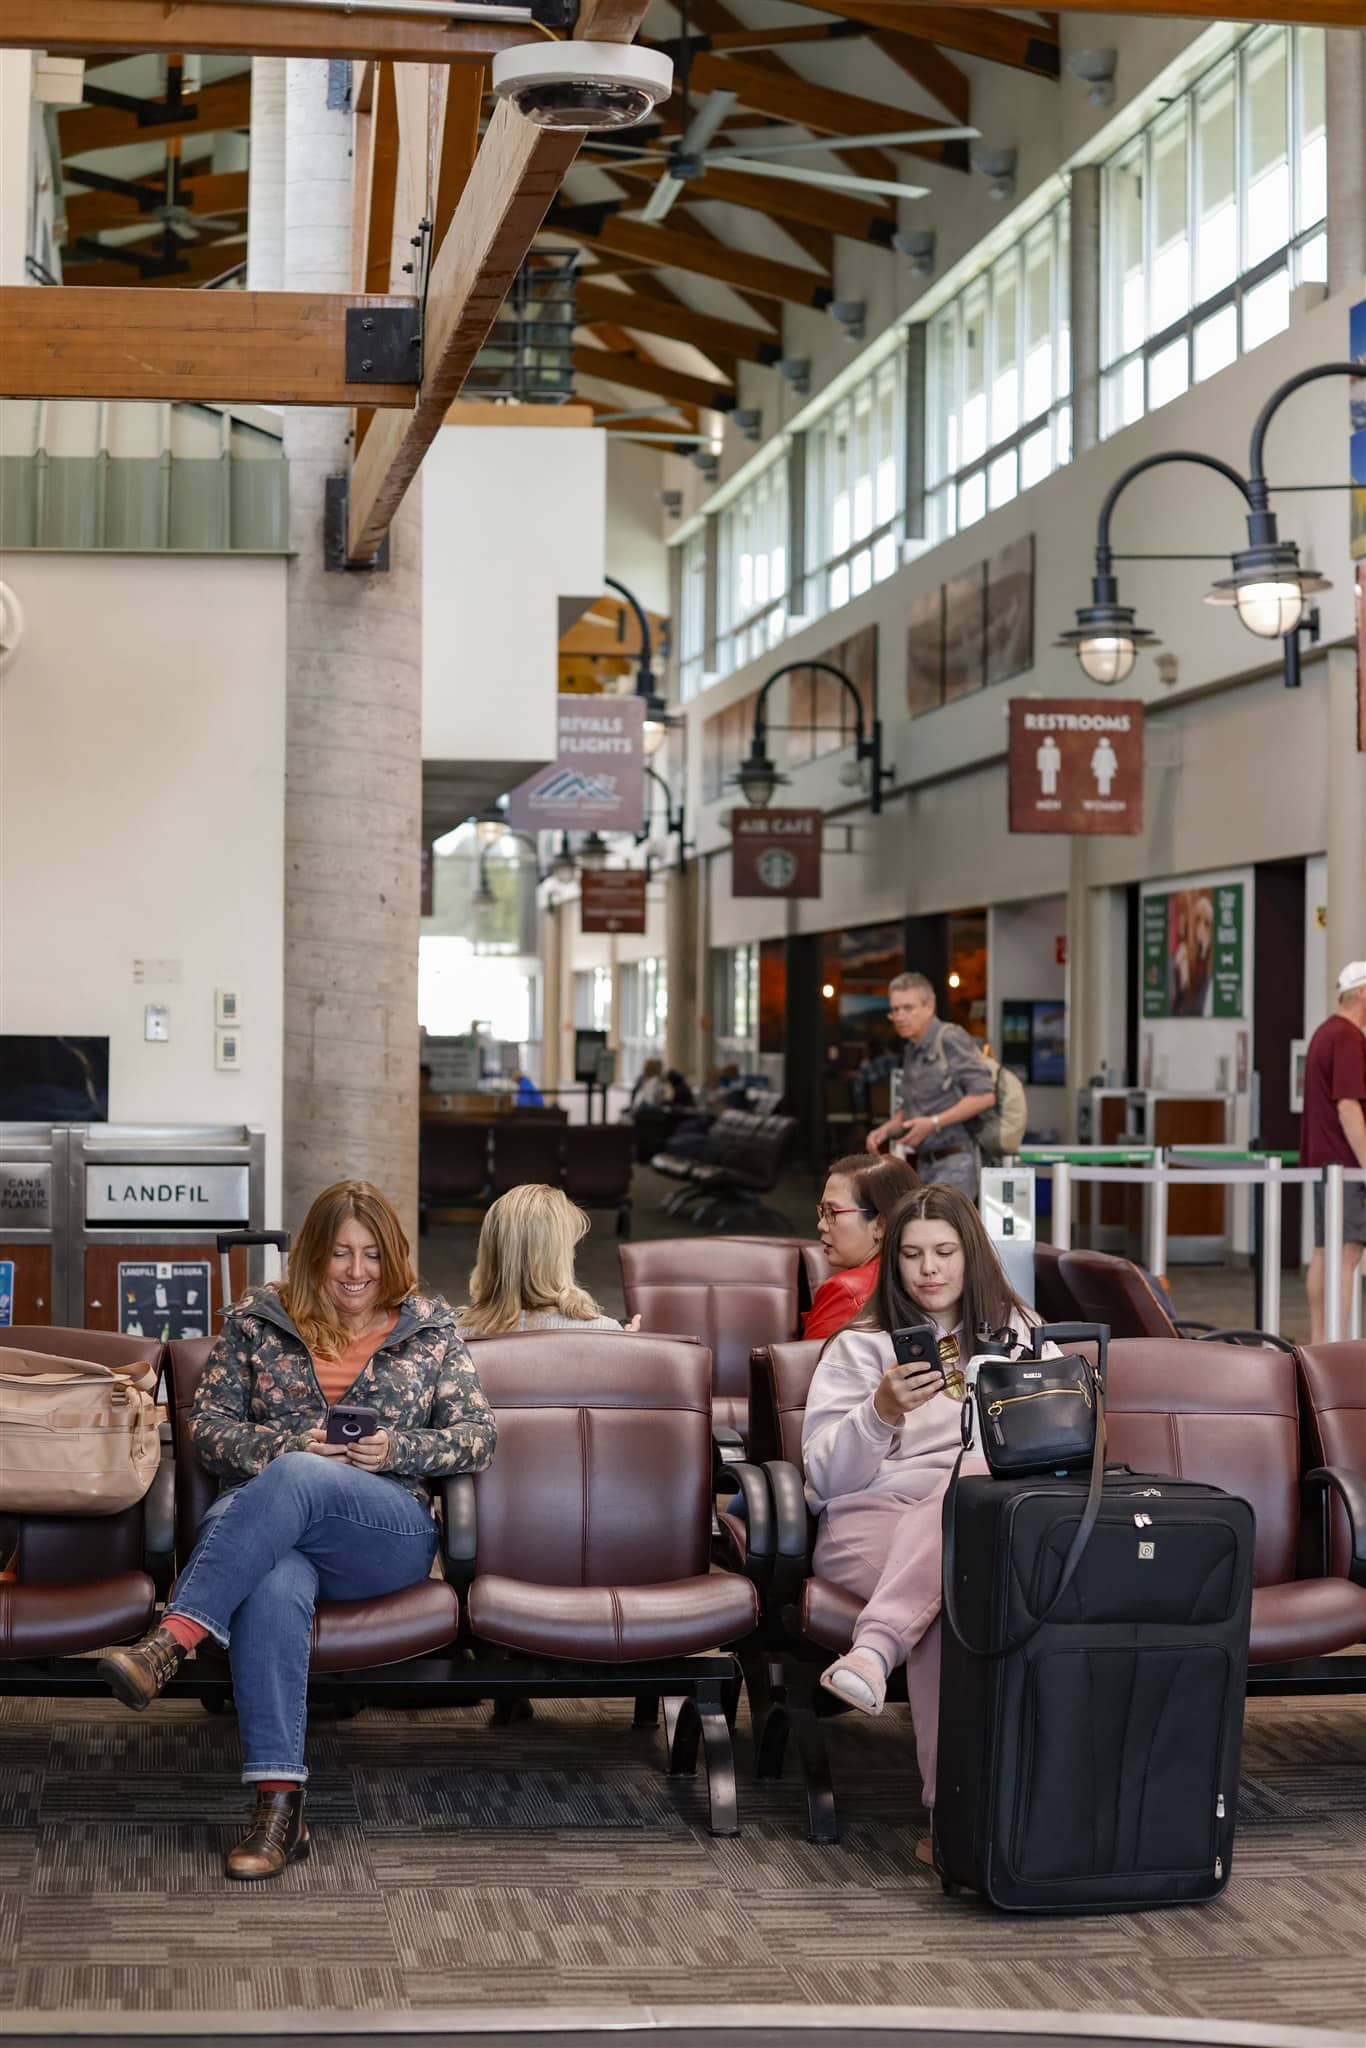 Passengers using phones inside Flagstaff Airport